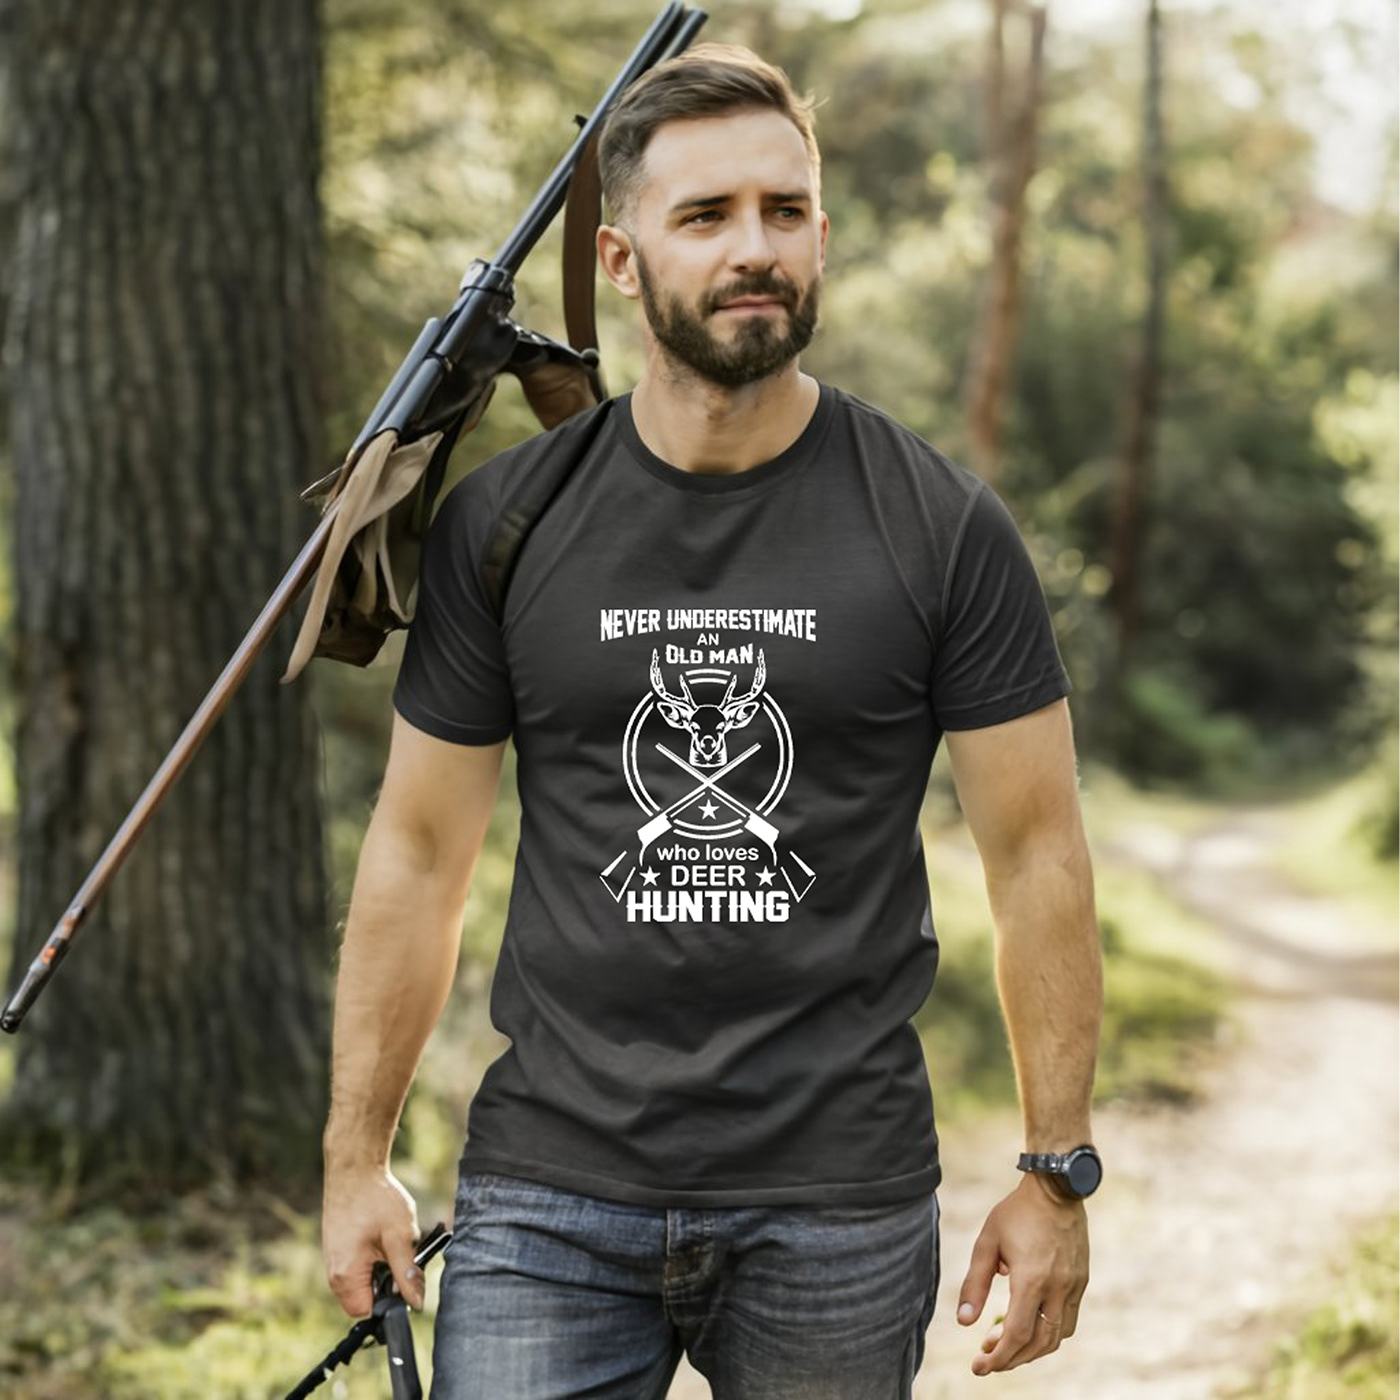 Outdoor Hunting T-shirt Design hunter t-shirt Tshirt Design forest Hunting deer animal Gun